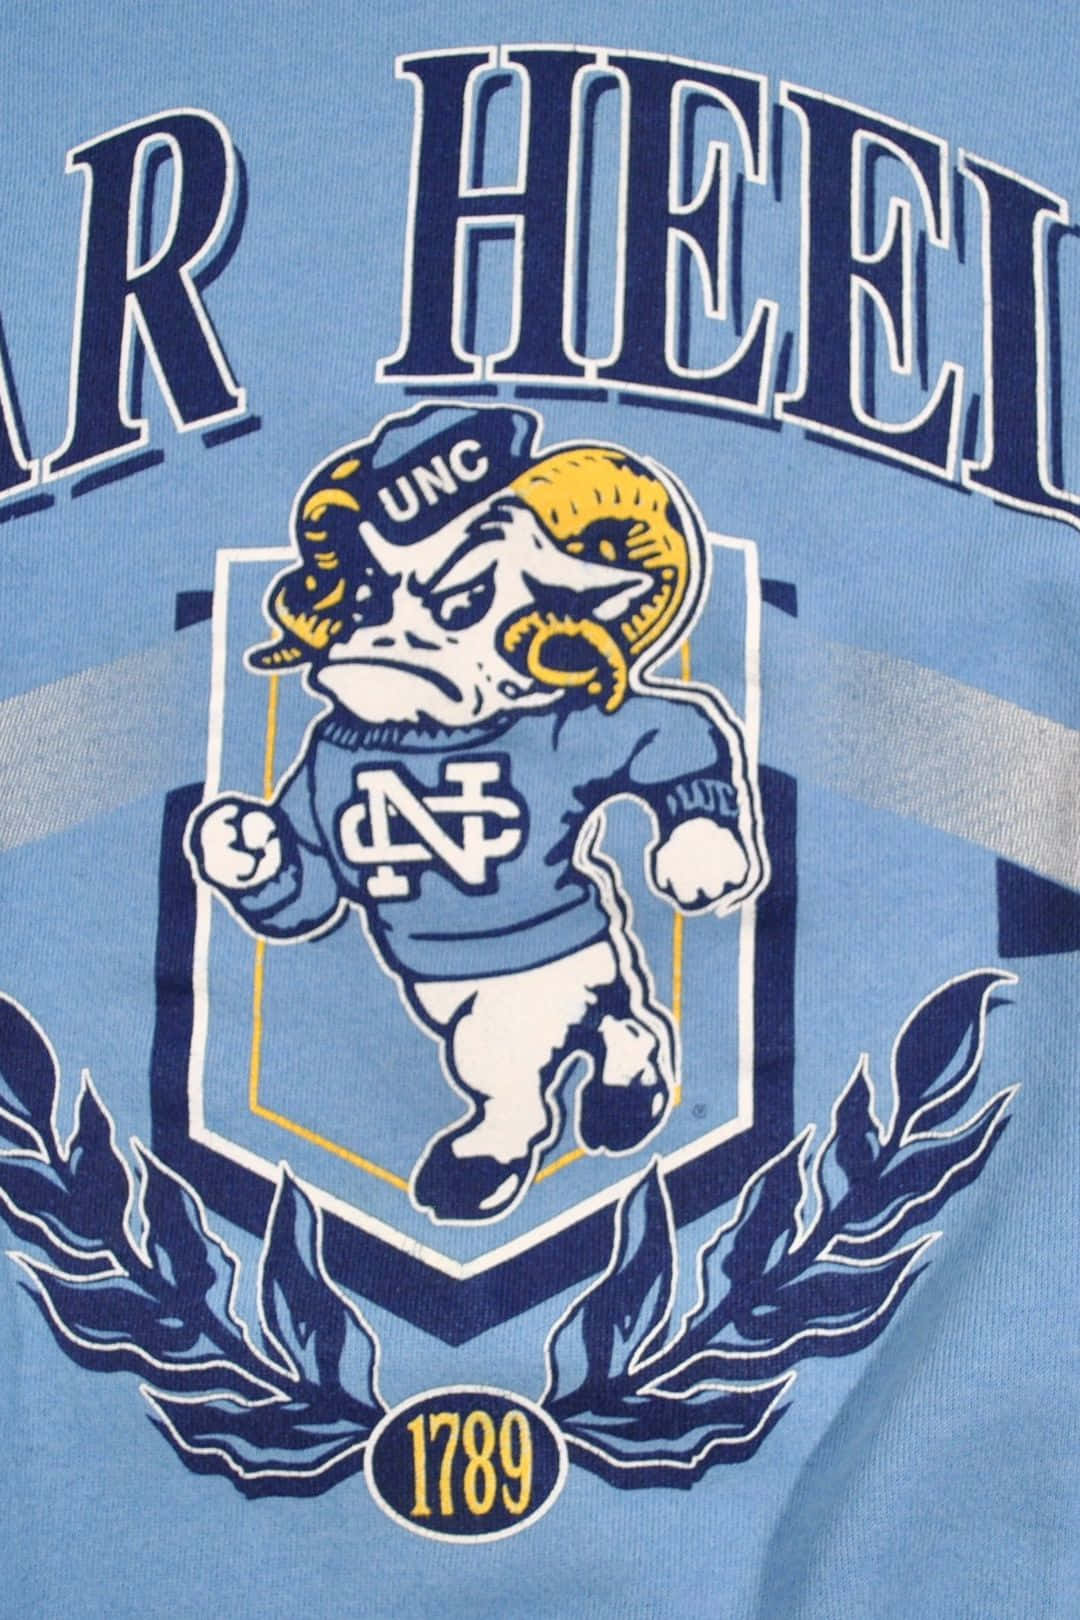 North Carolina Tar Heels T-shirt Wallpaper